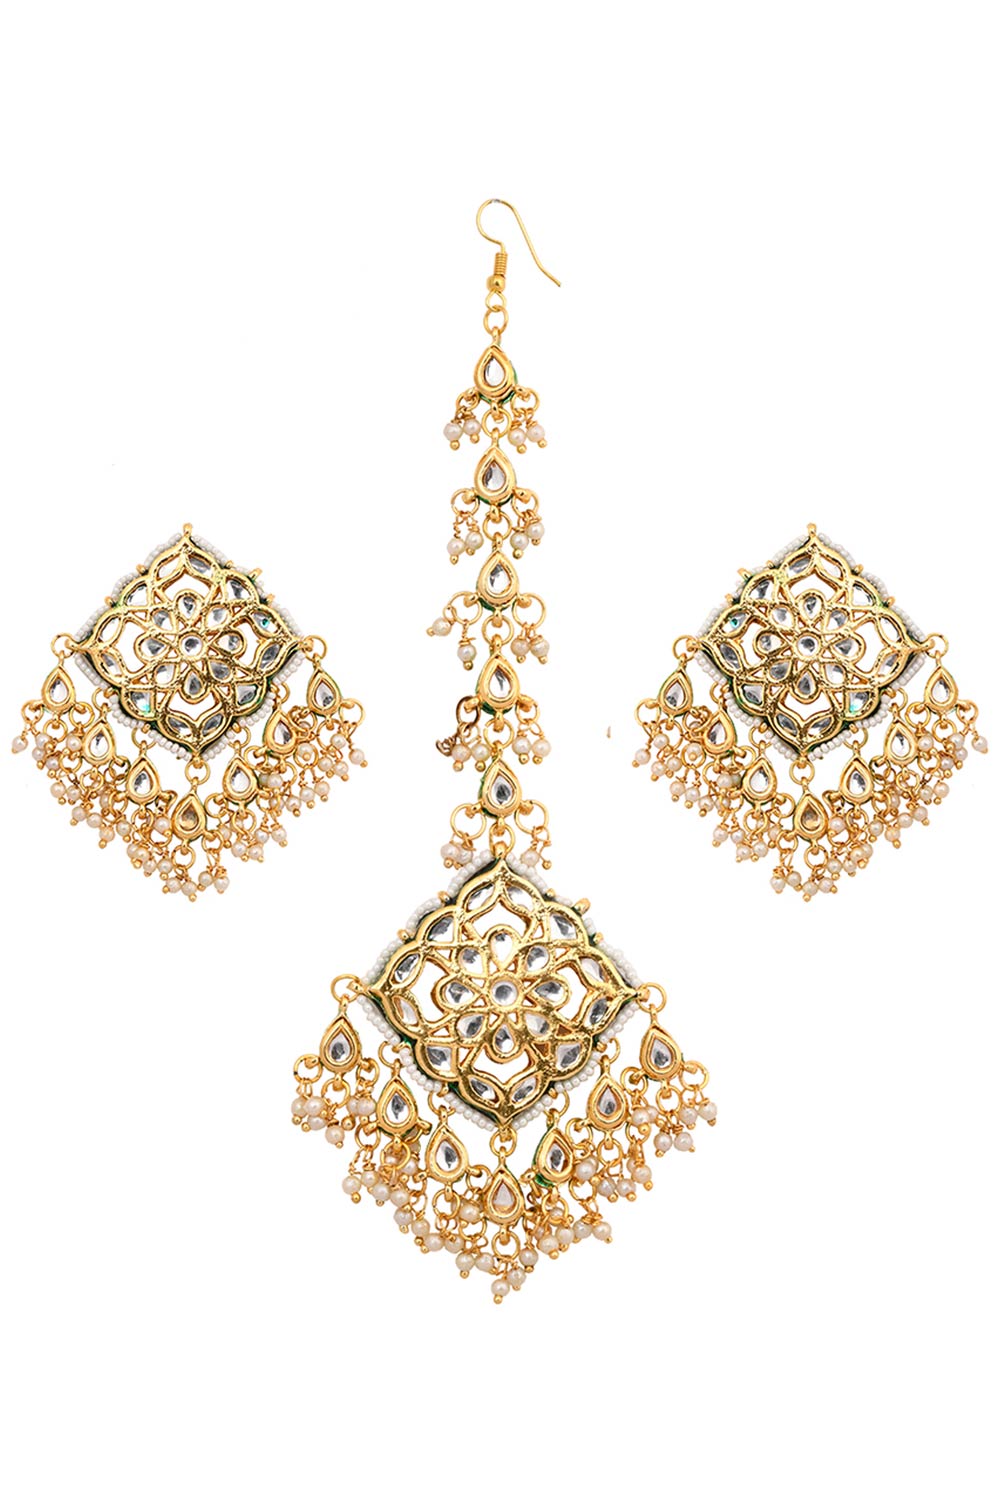 Gold tone Kundan inspired Mang tikka with earrings